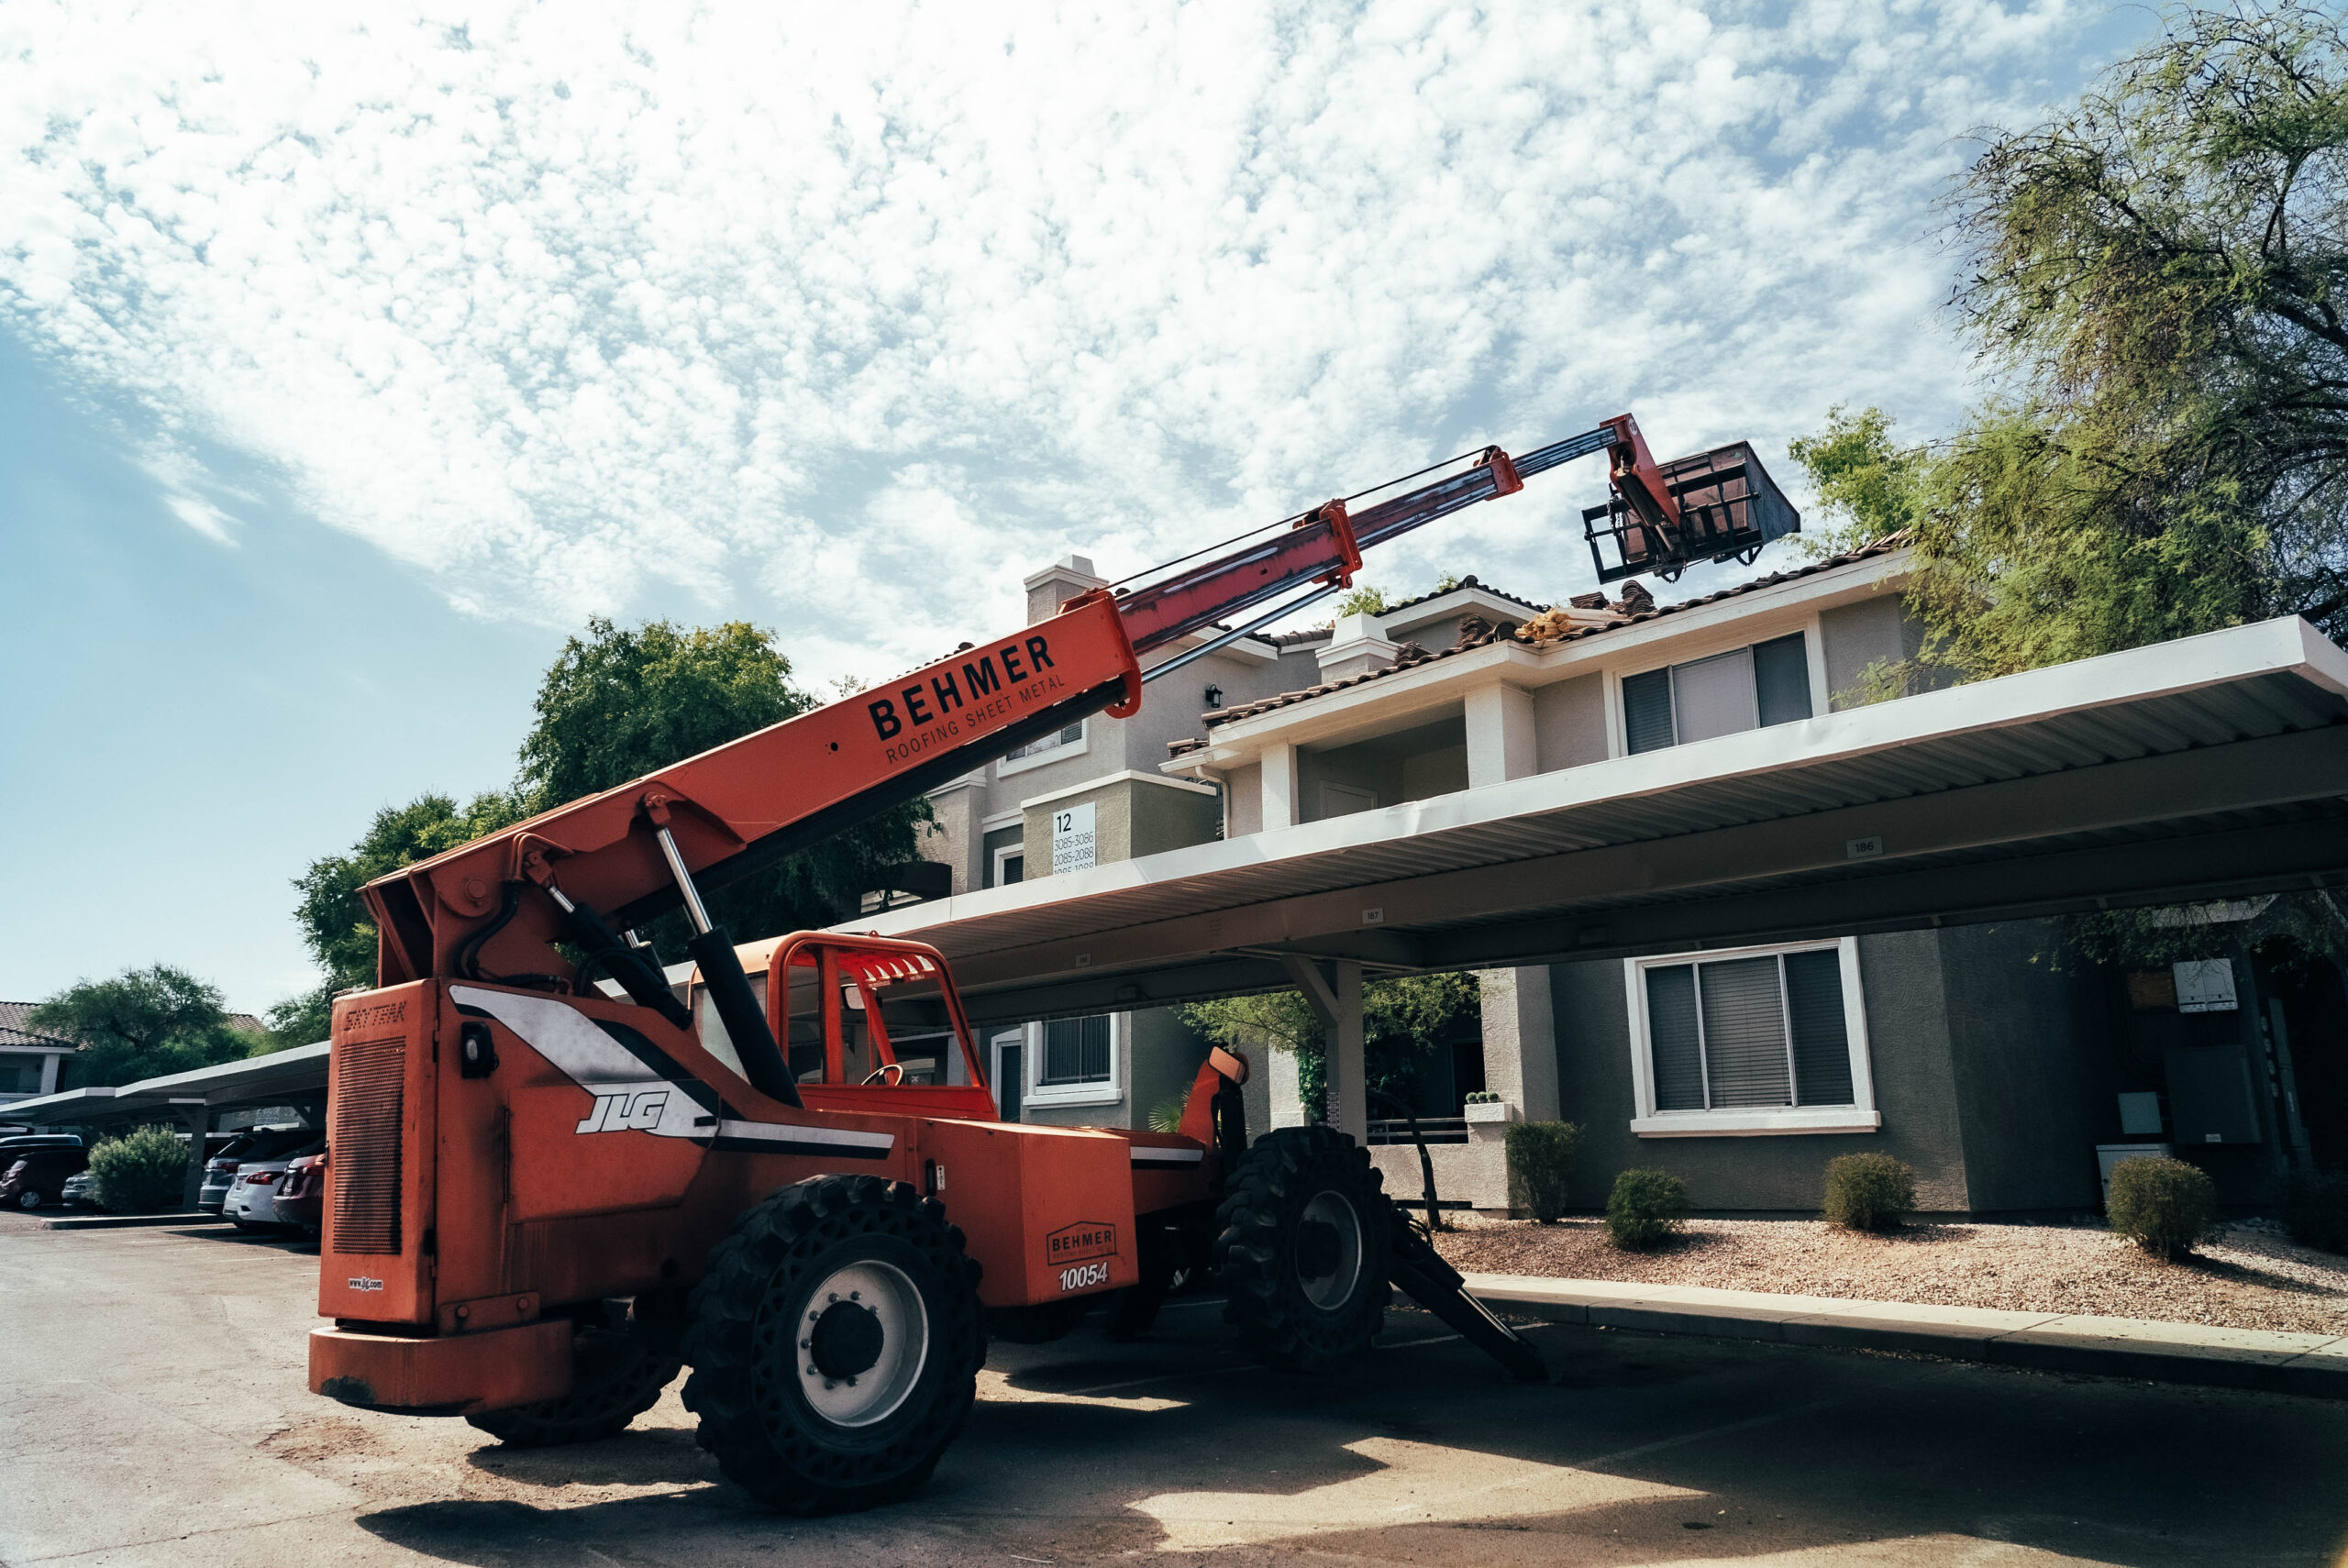 Orange crane positioned at a Scottsdale roofing job site.